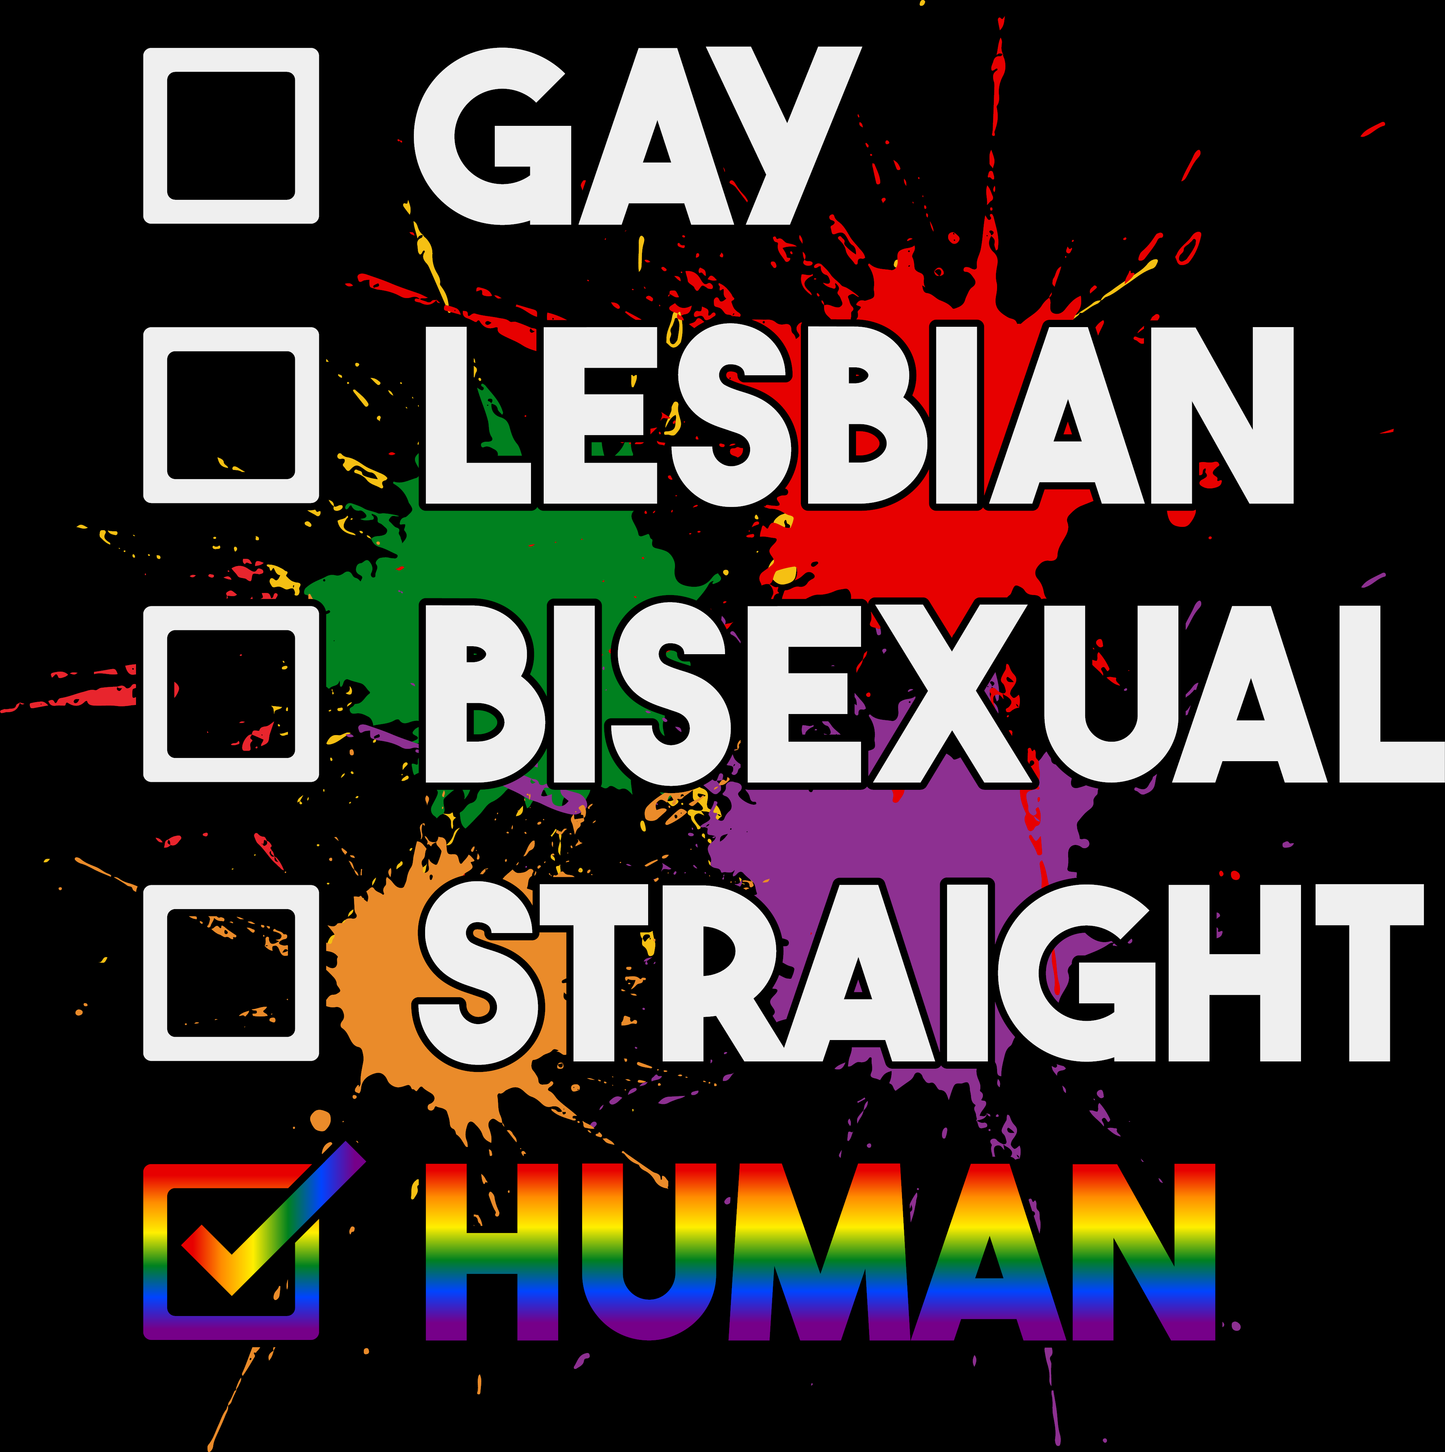 Gay-Lesbian-Bisexual-Straight-Human